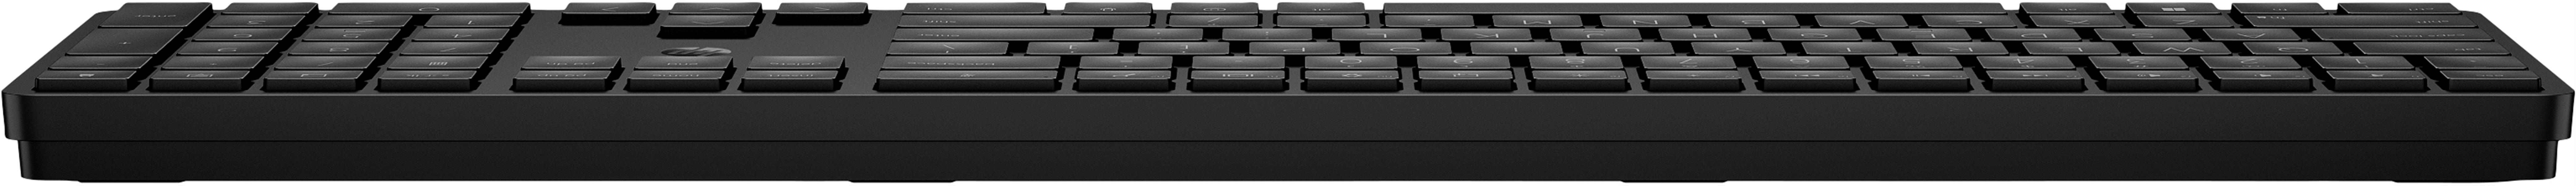 HP 450 programmeerbaar draadloos toetsenbord